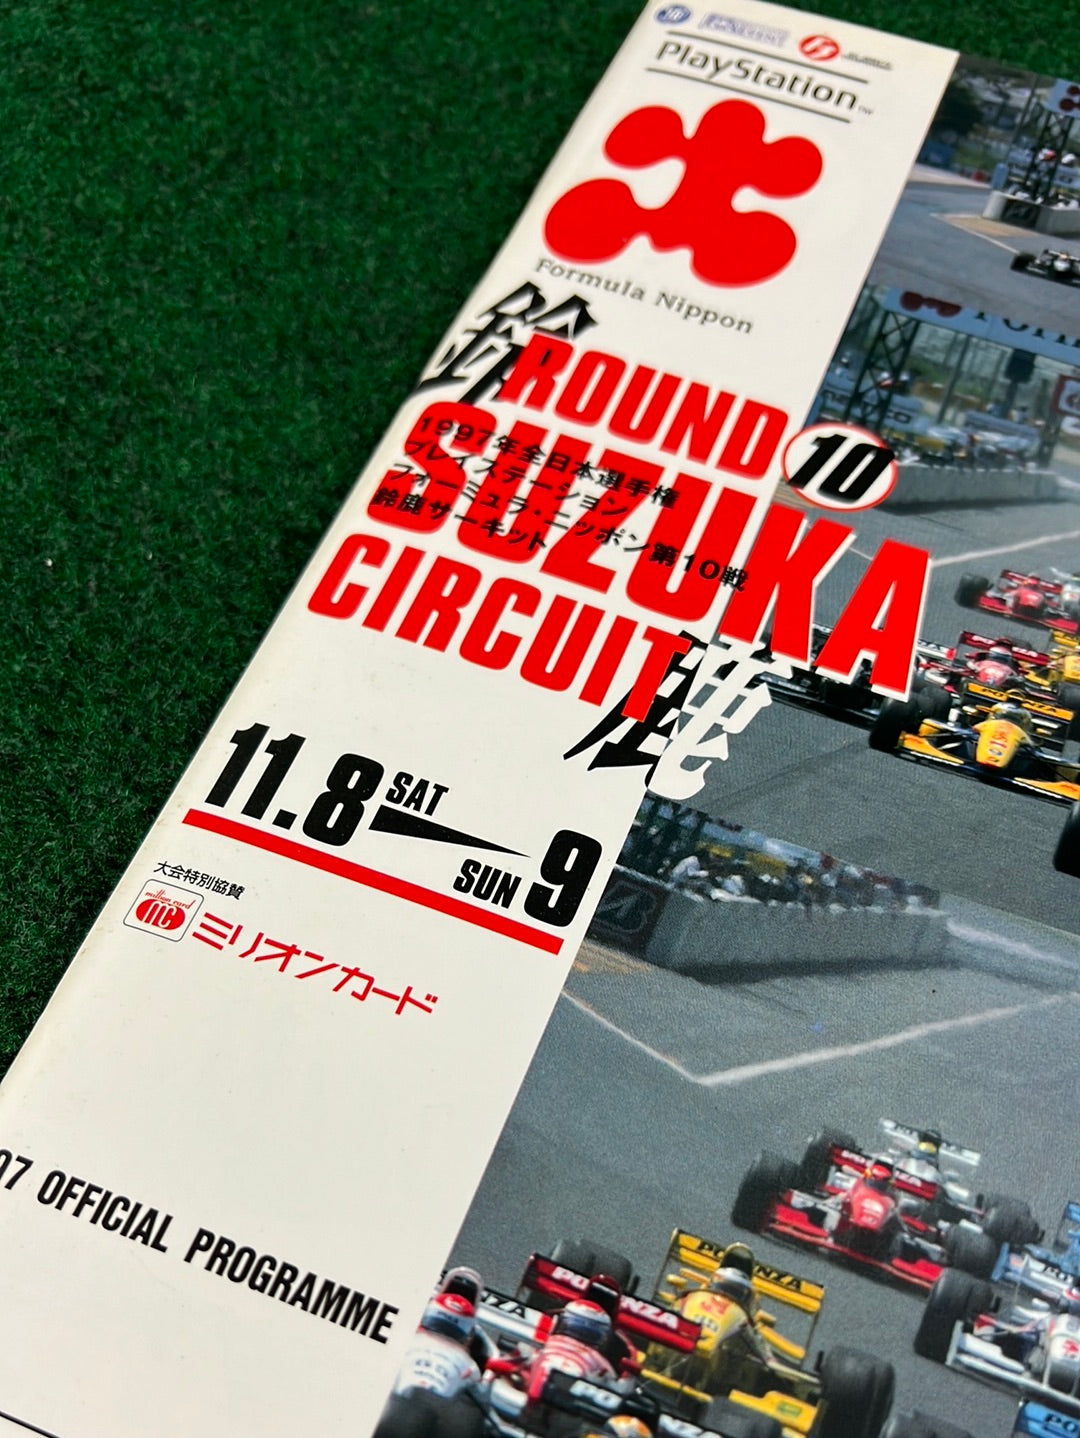 Formula Nippon - 1997 Suzuka Circuit Race Event Programs Set of 3